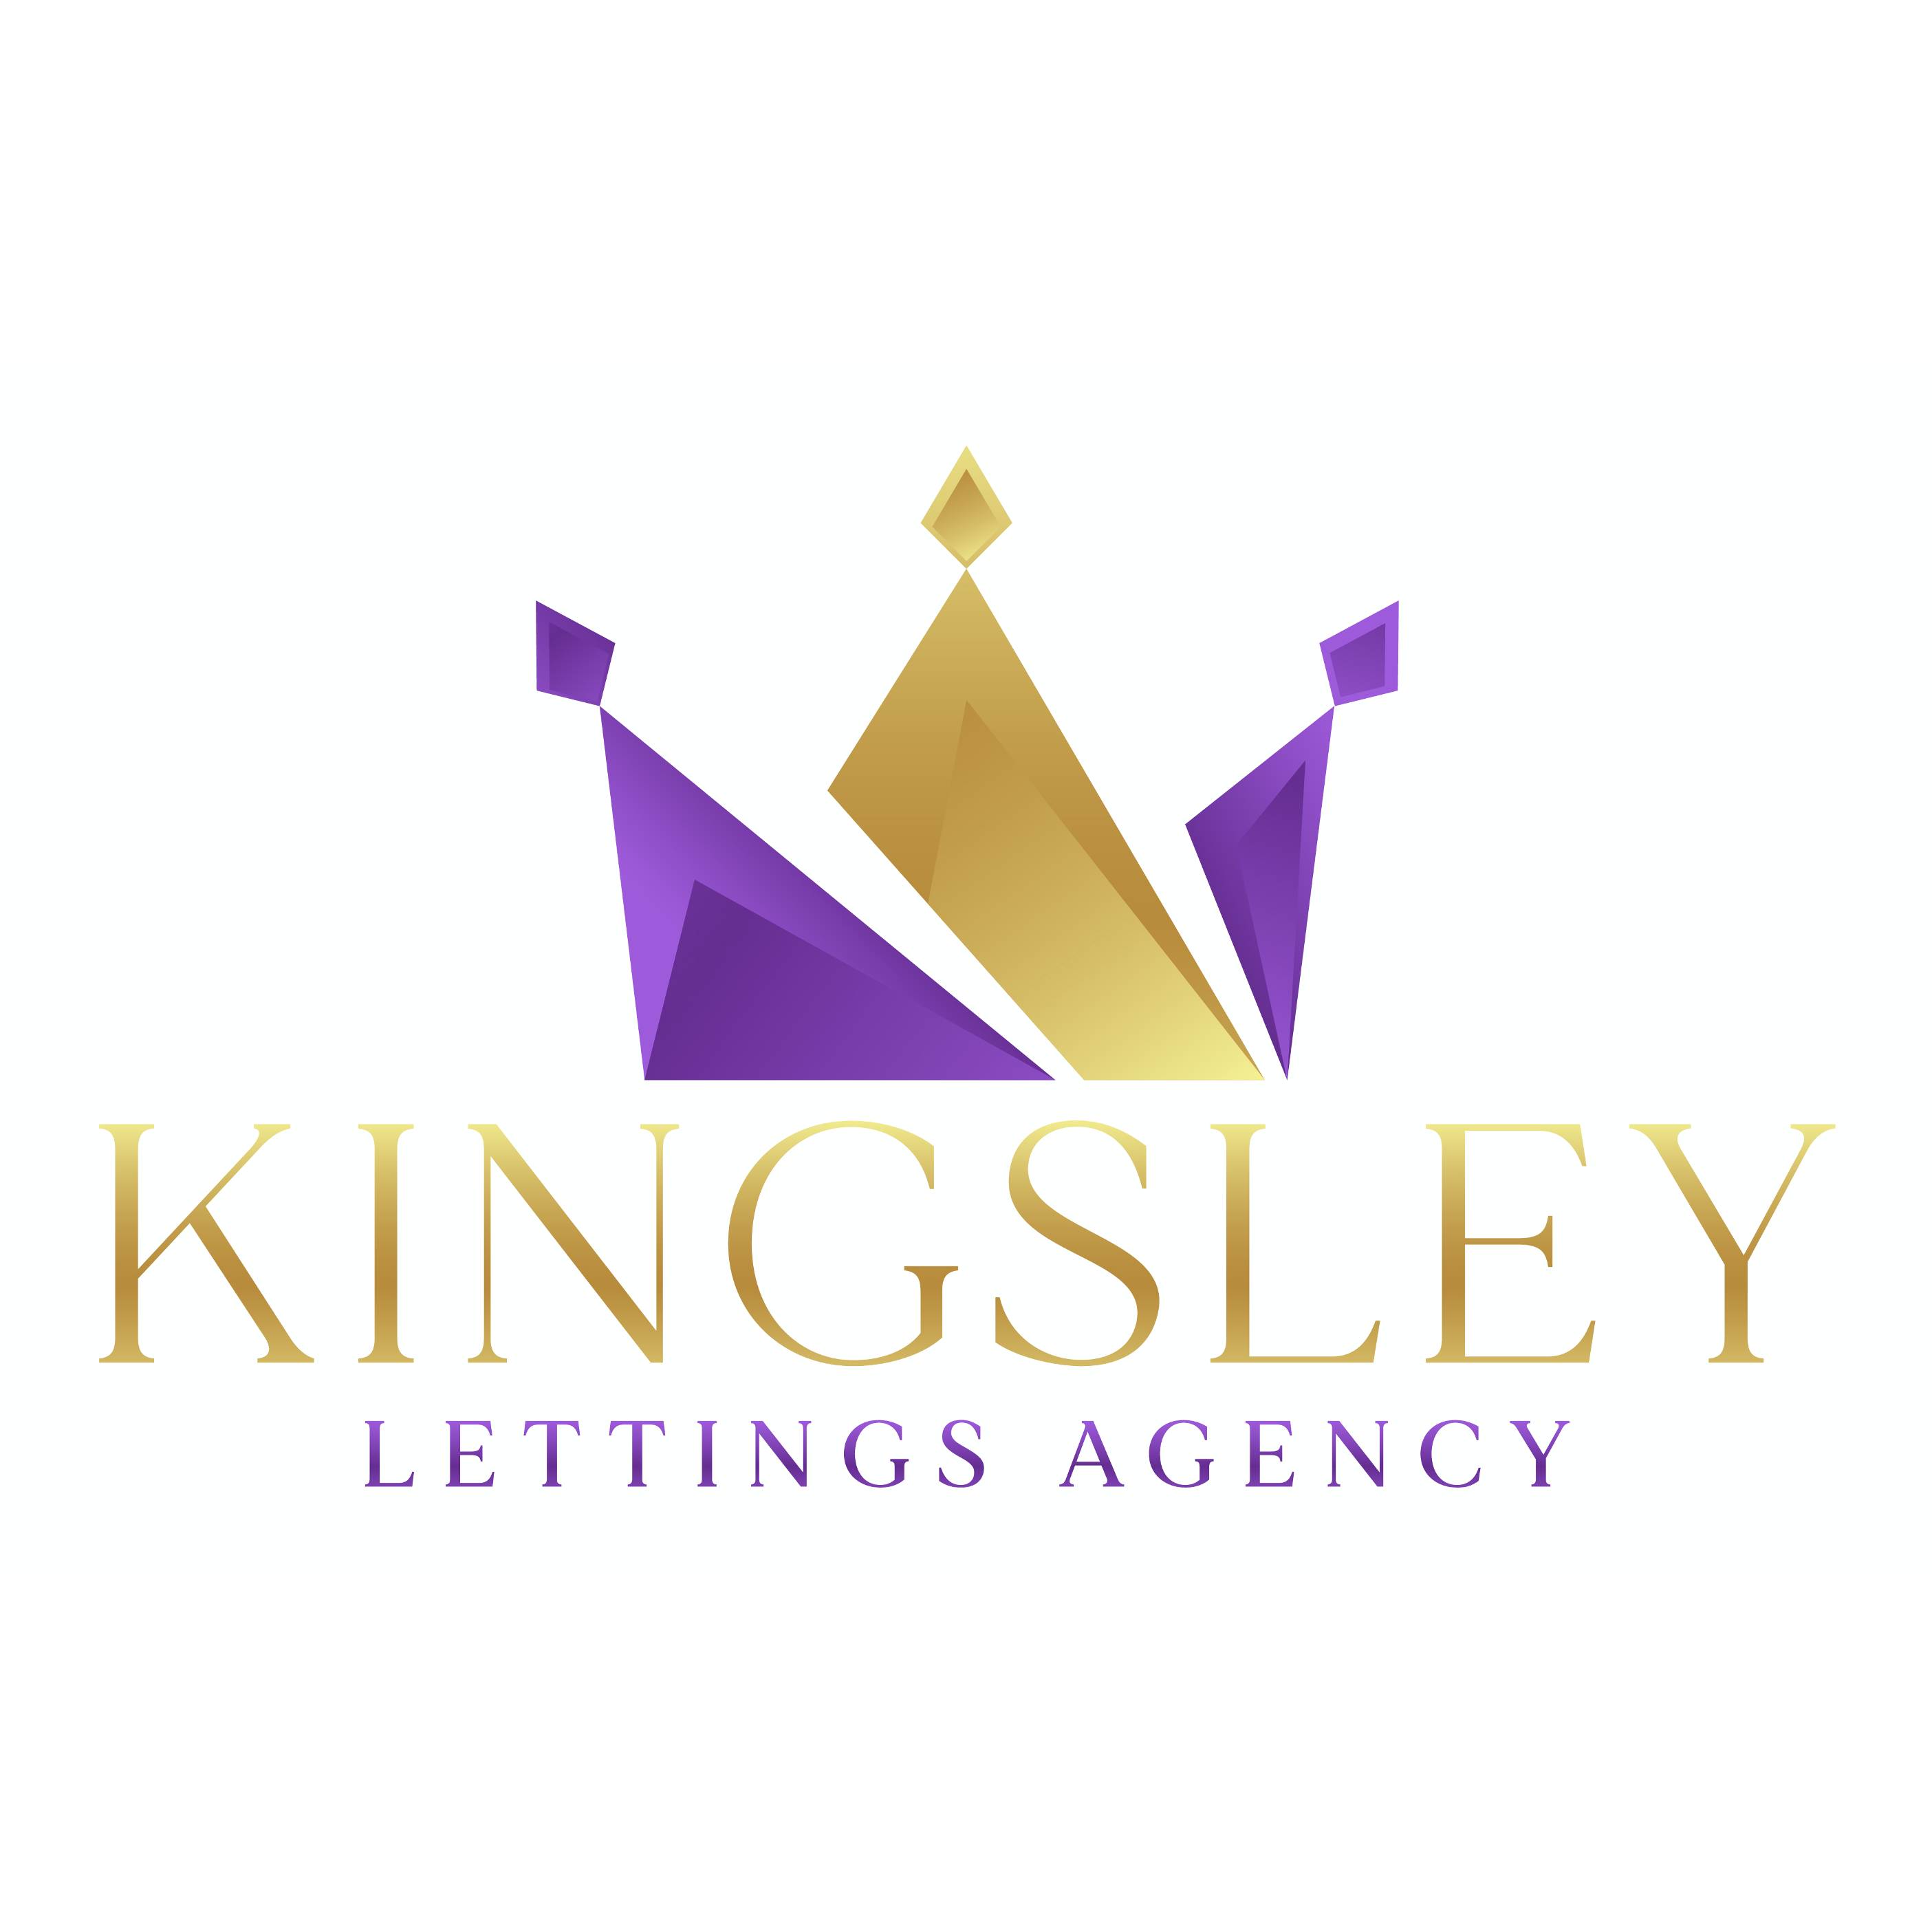 Kingsley Lettings Agency logo